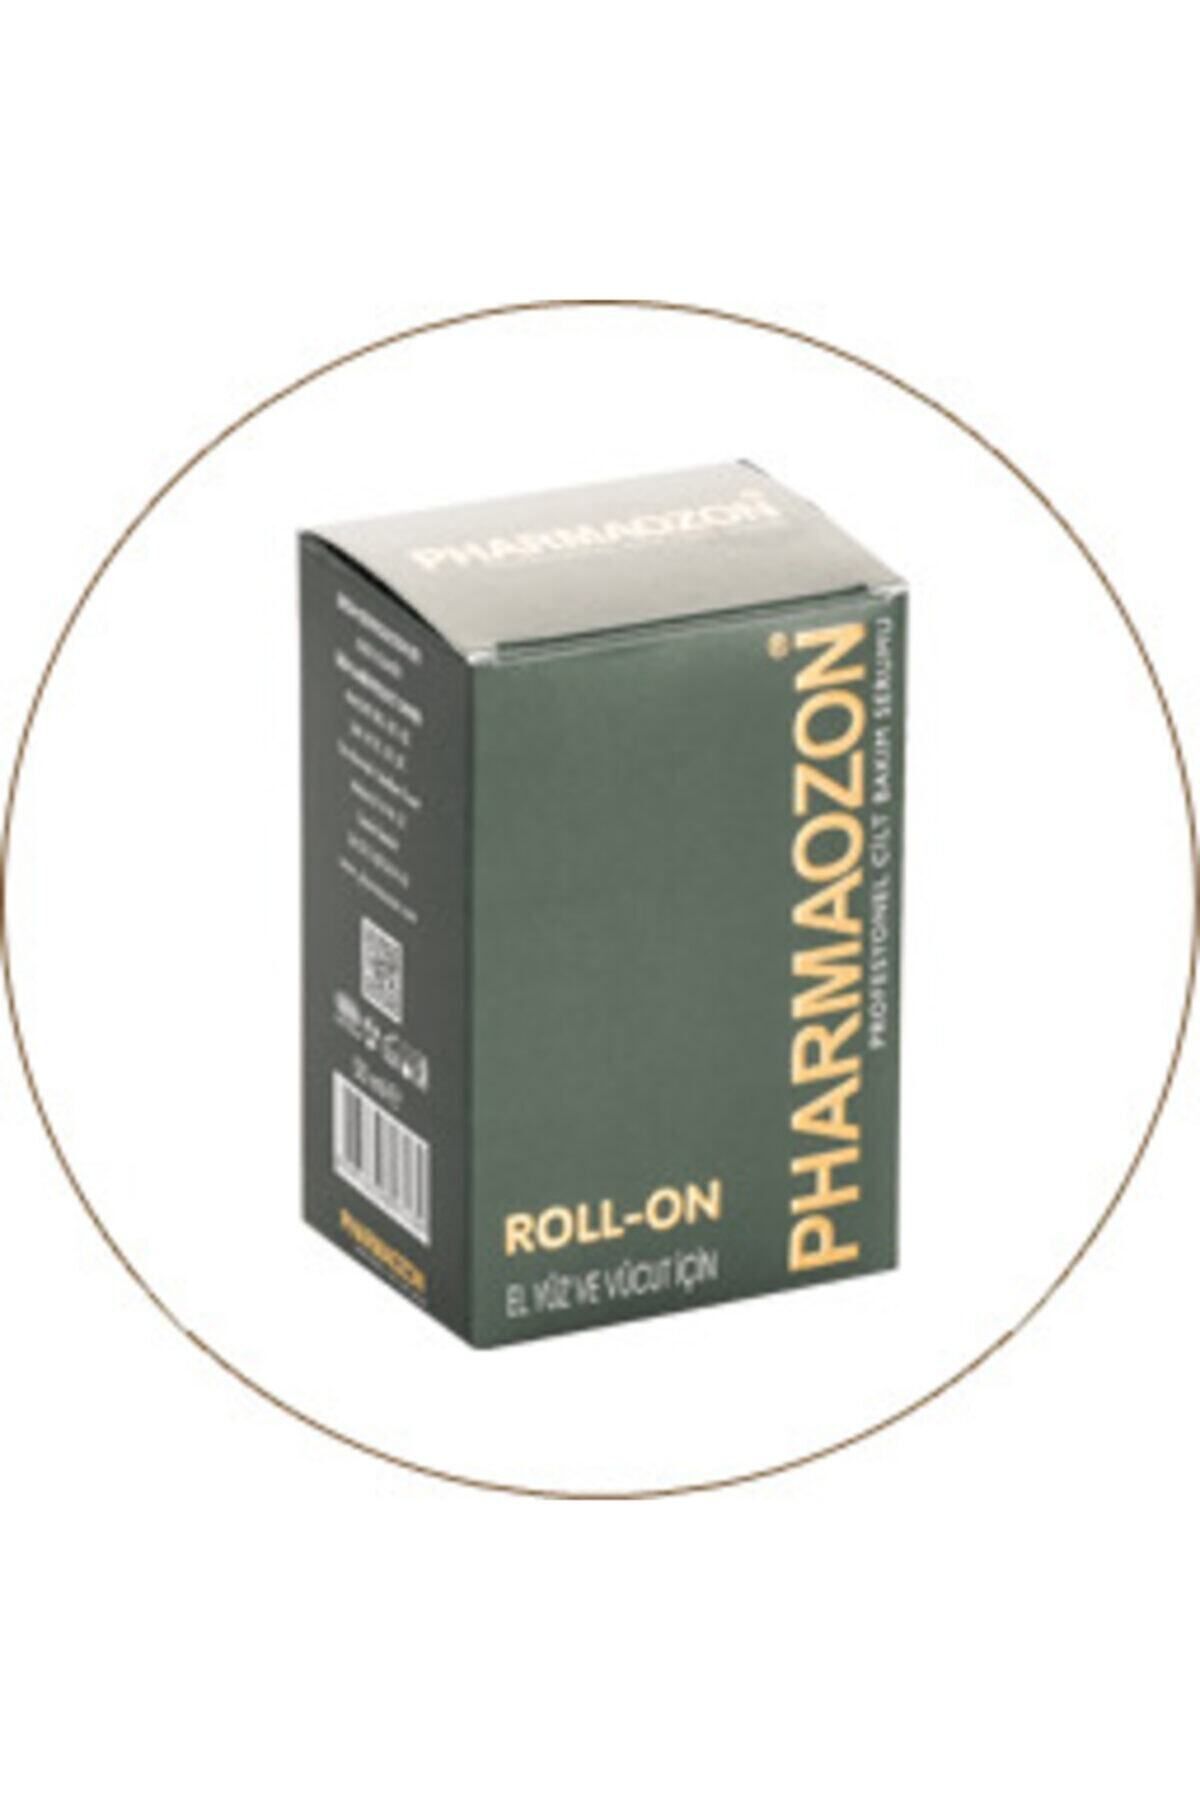 PHARMAOZON Roll-on Cilt & Vücut Serumu 50 ml